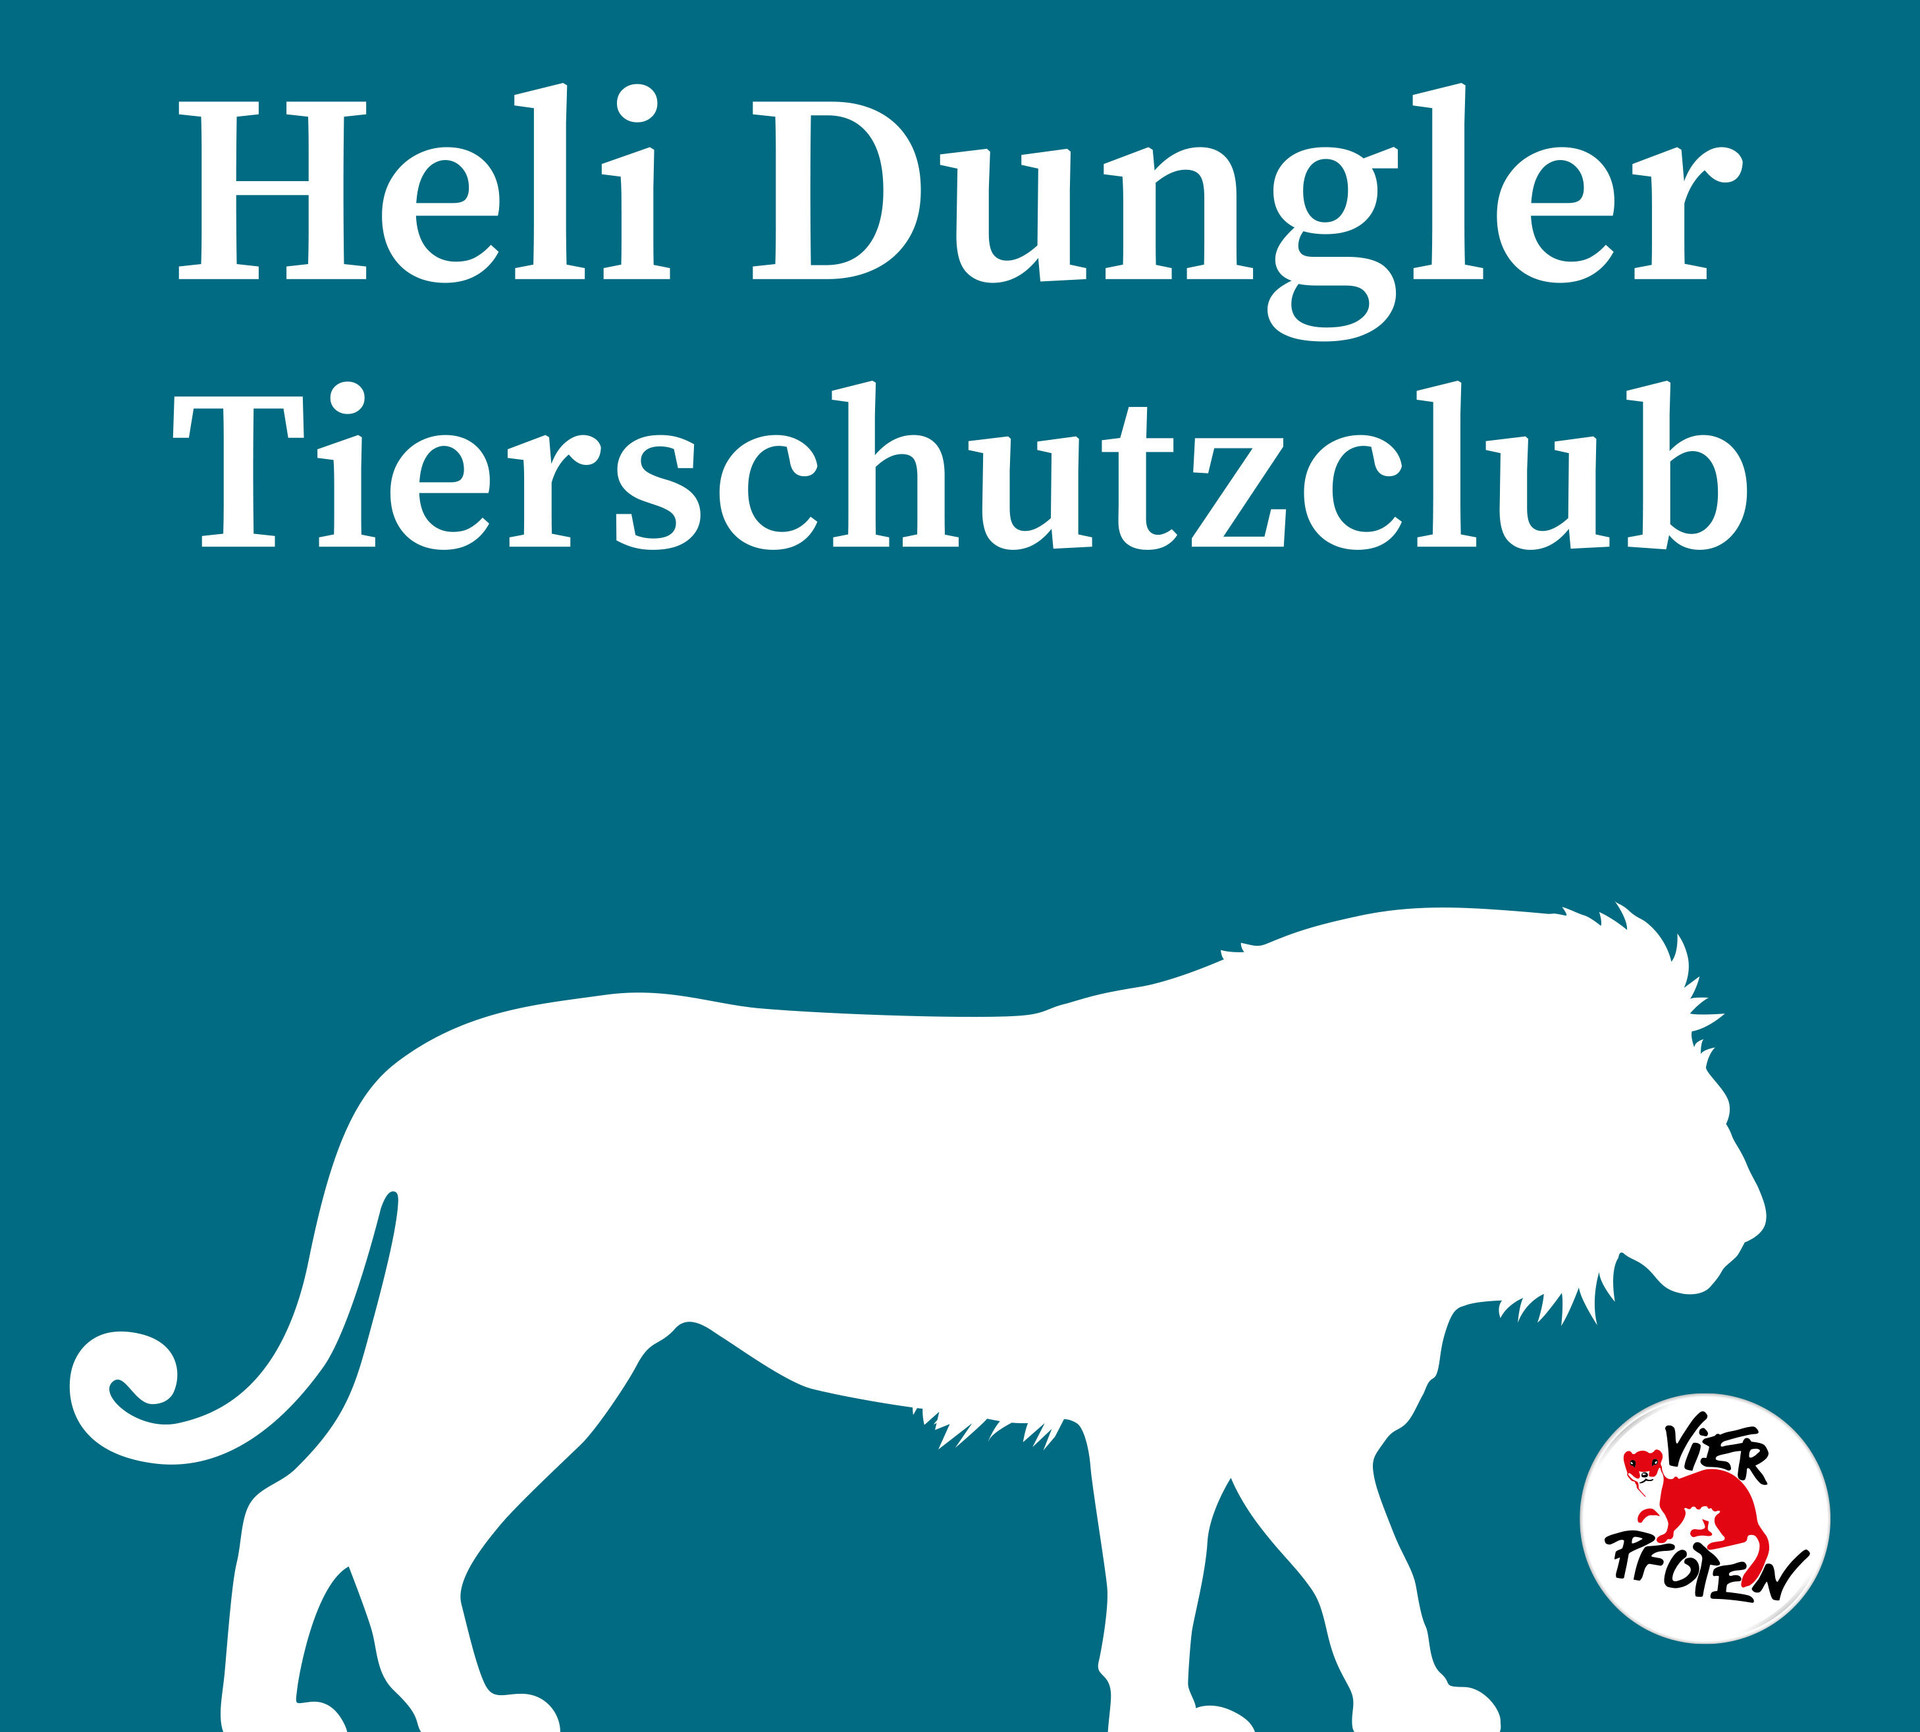 Heli Dungler Tierschutzclub